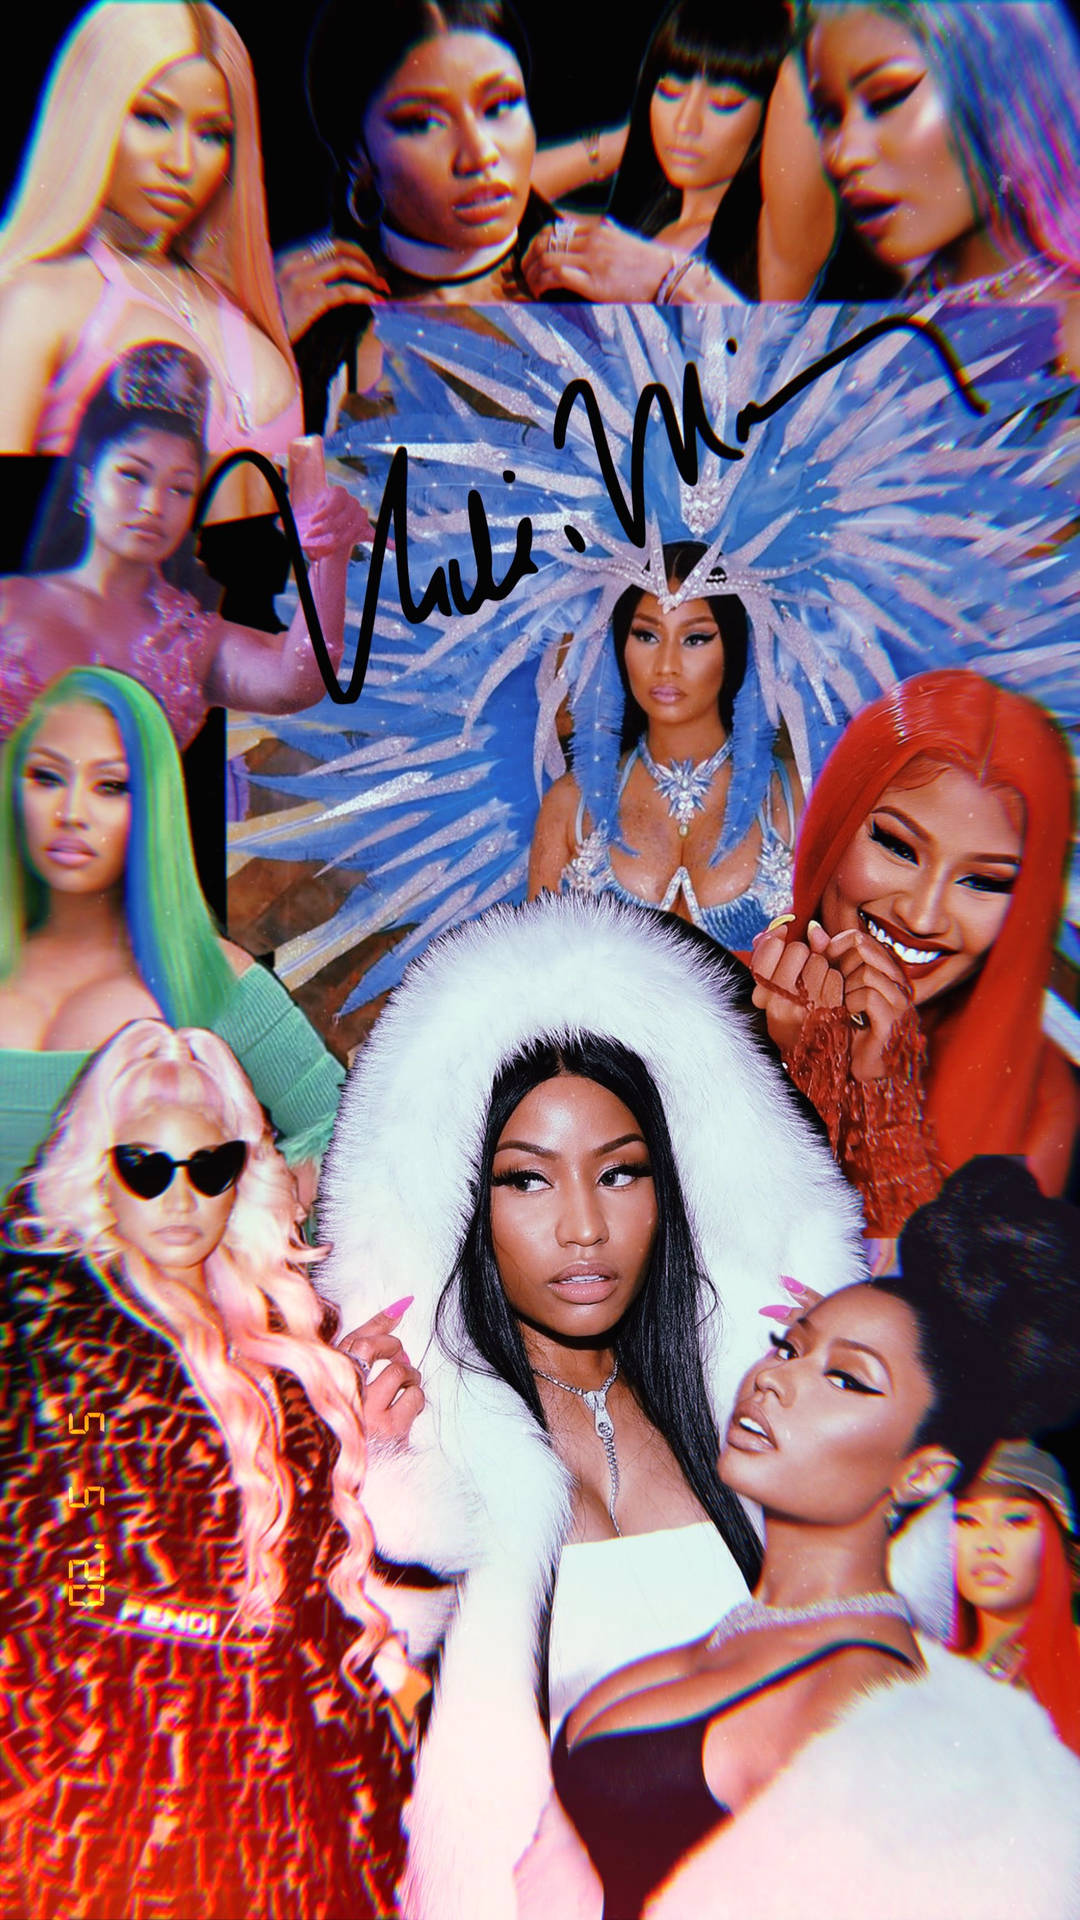 Nicki Minaj Autograph Image Background